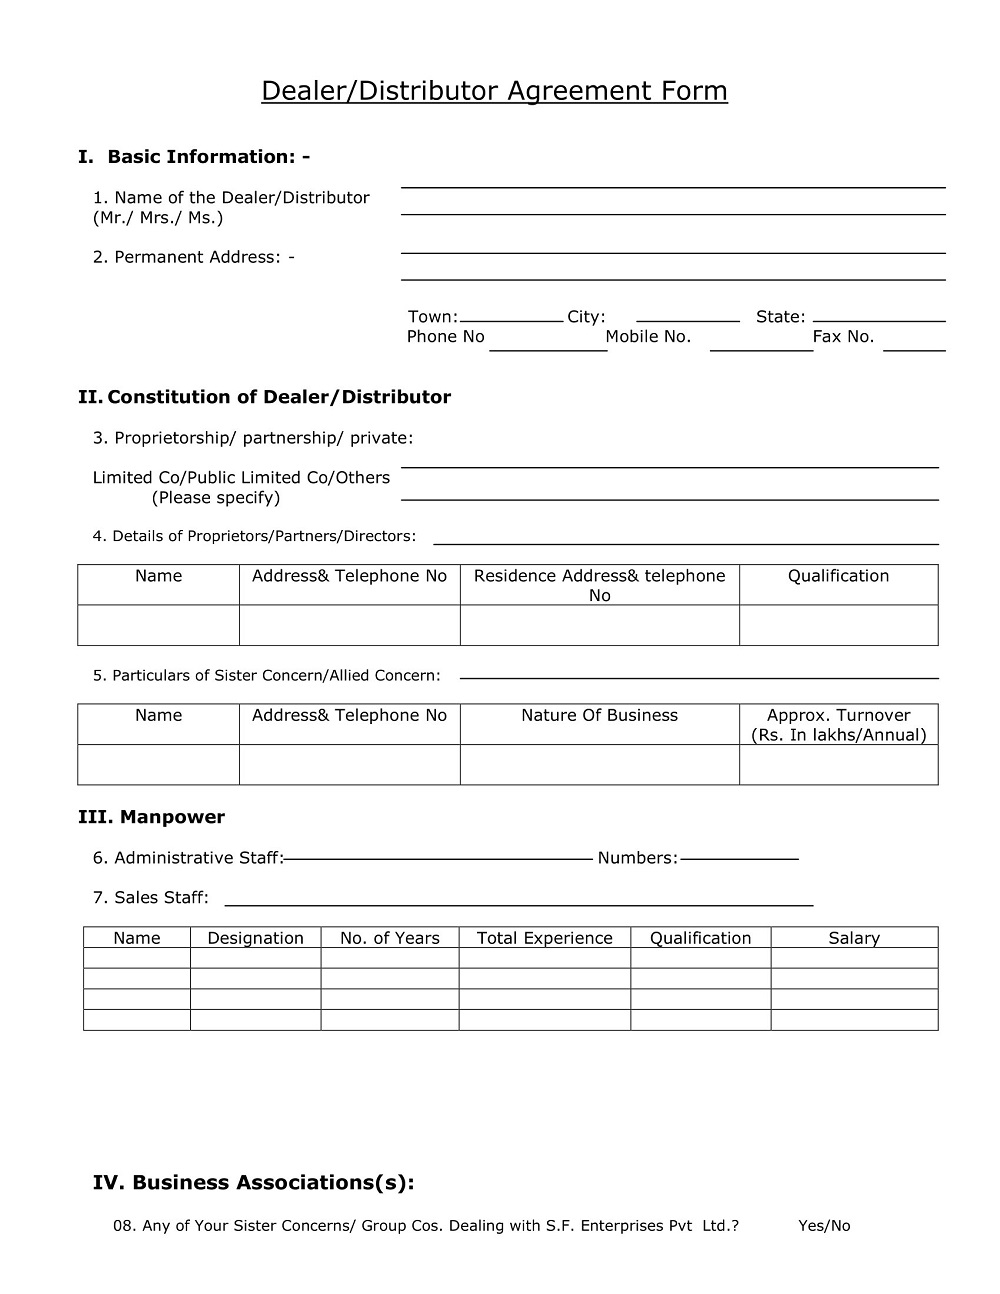 Distributor Agreement Form Template